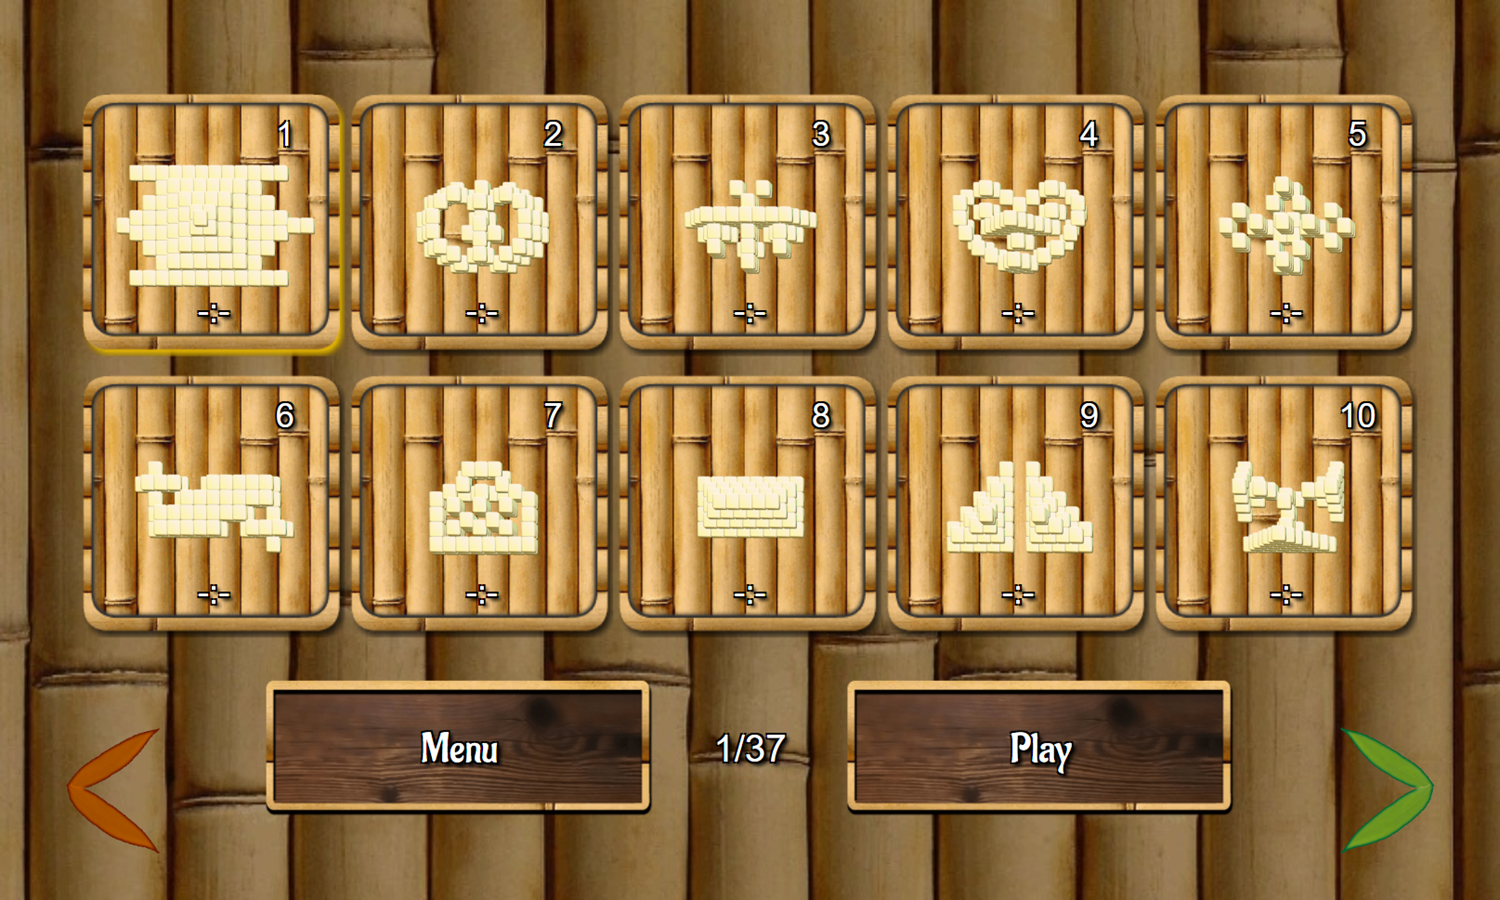 Tokio Mahjong Game Level Select Screenshot.